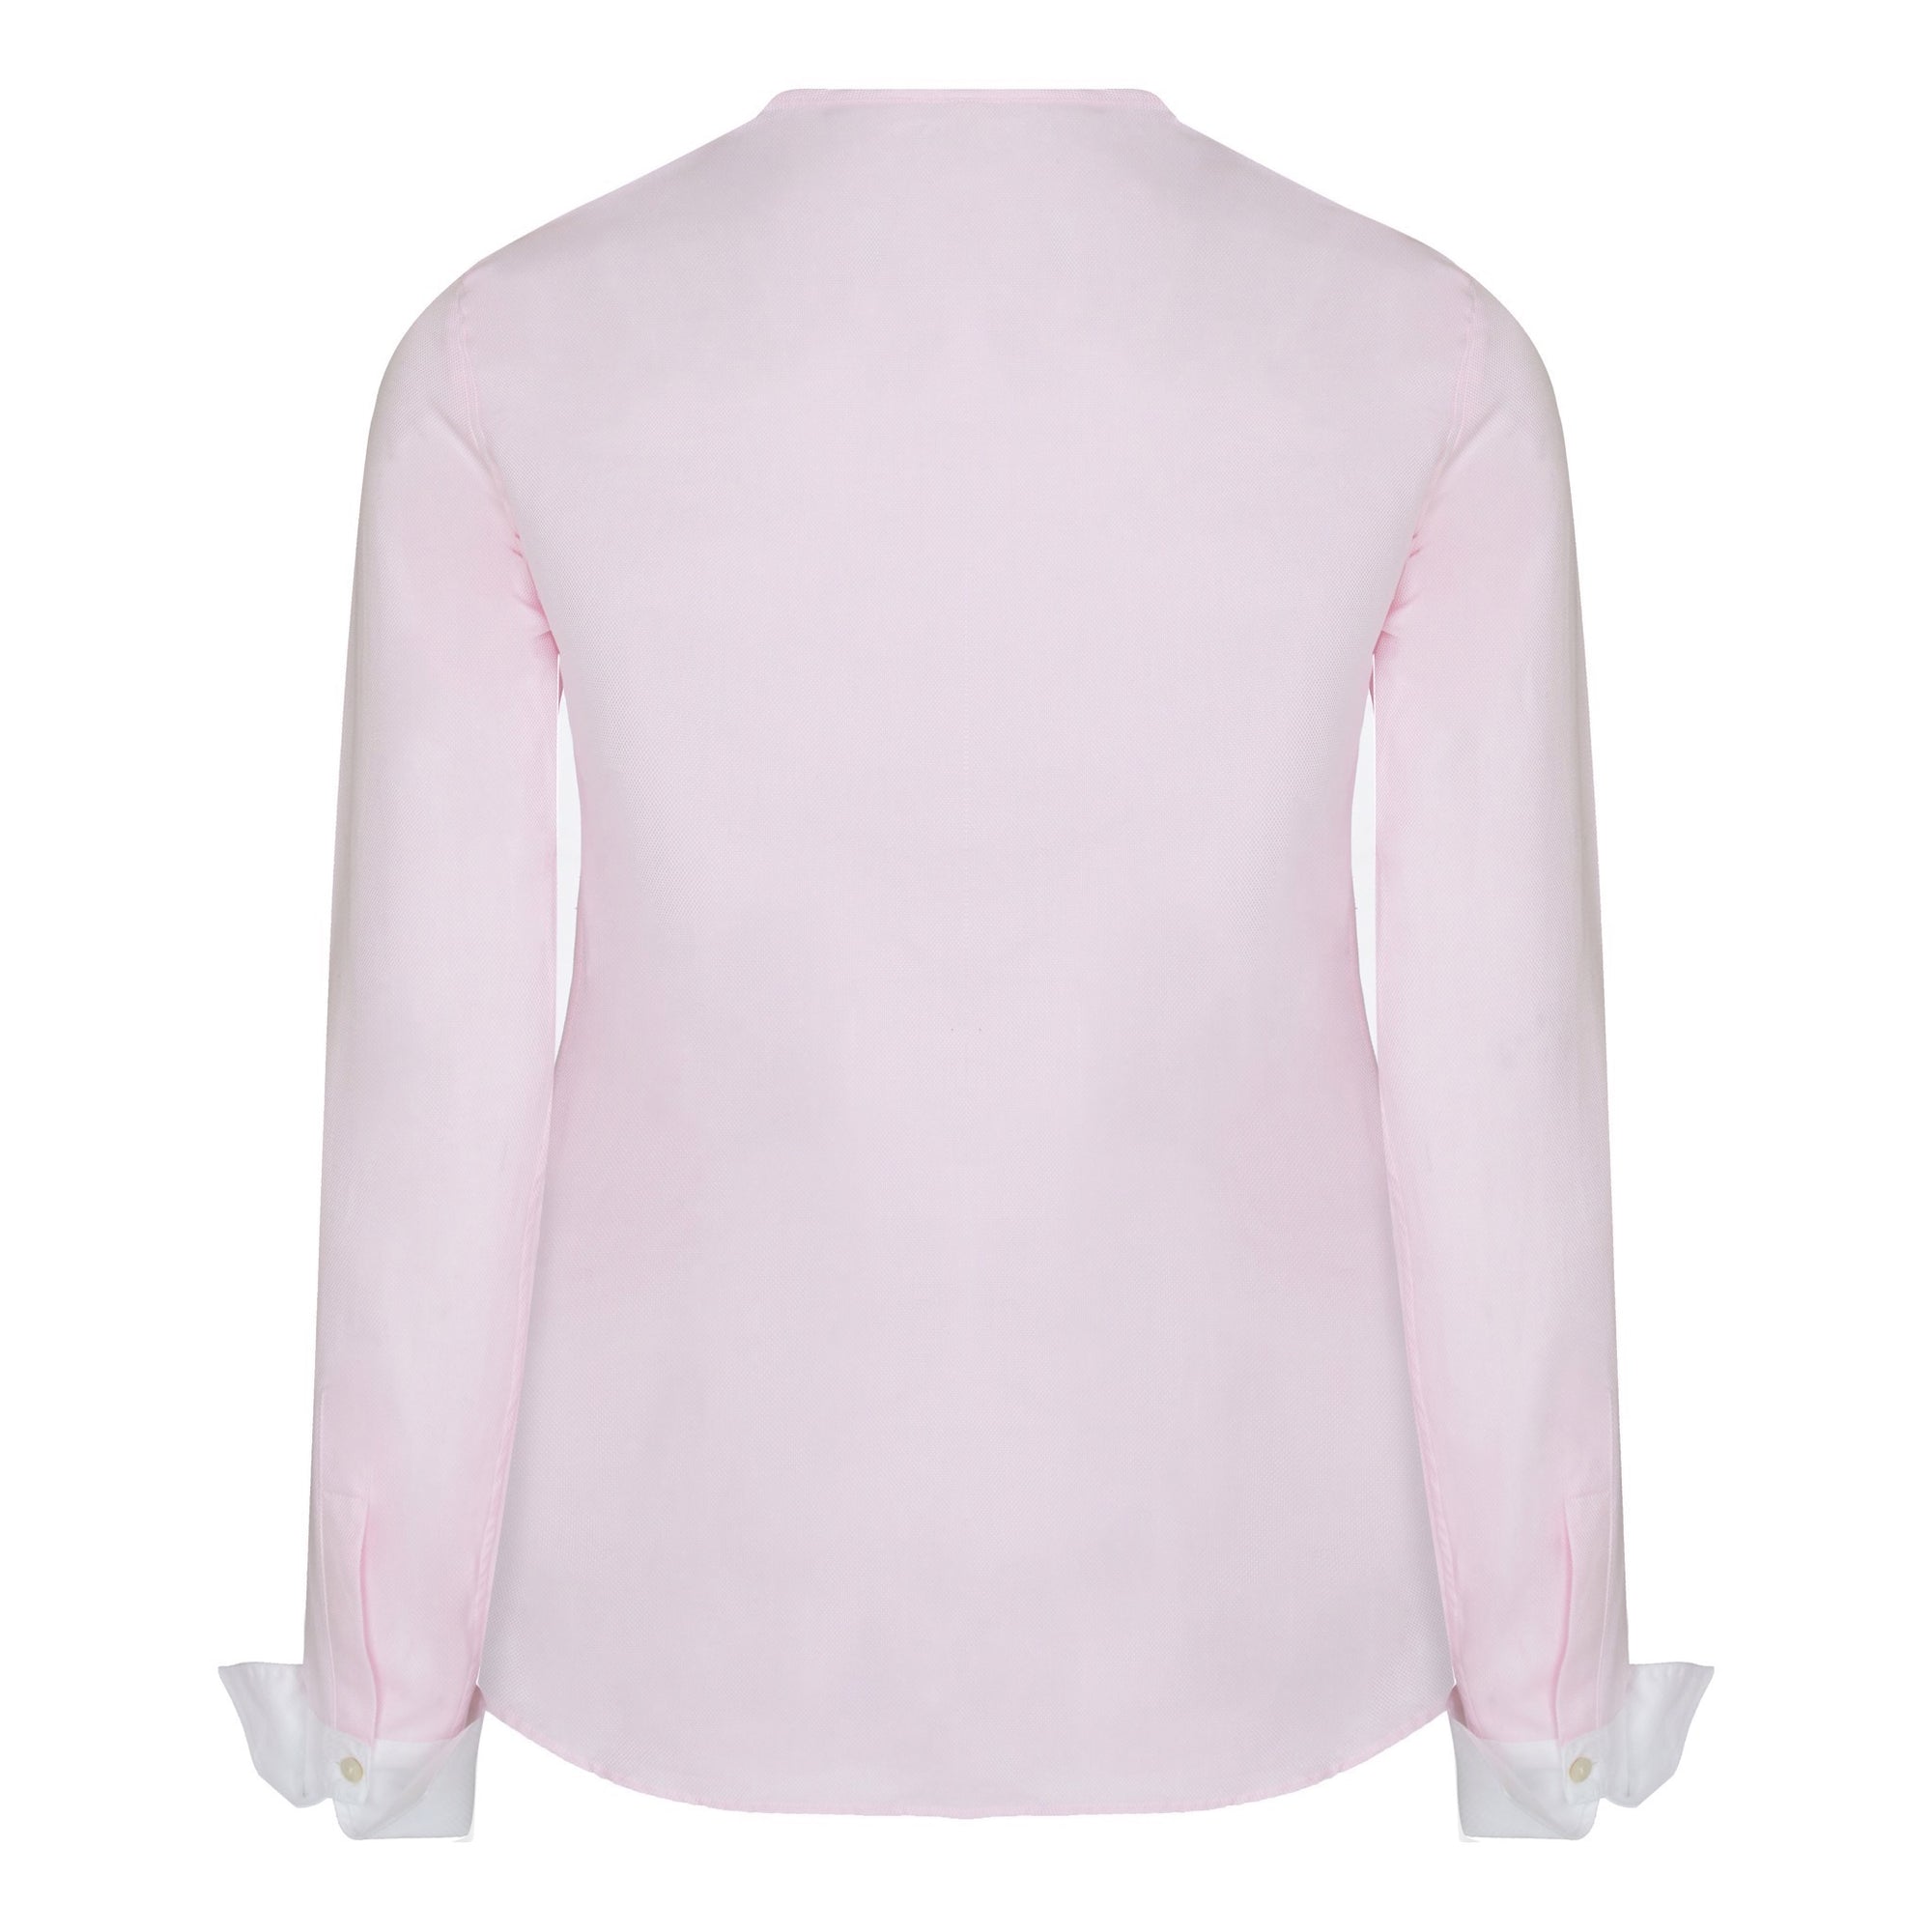 pink ponza shirt telegraph blouse #wfh